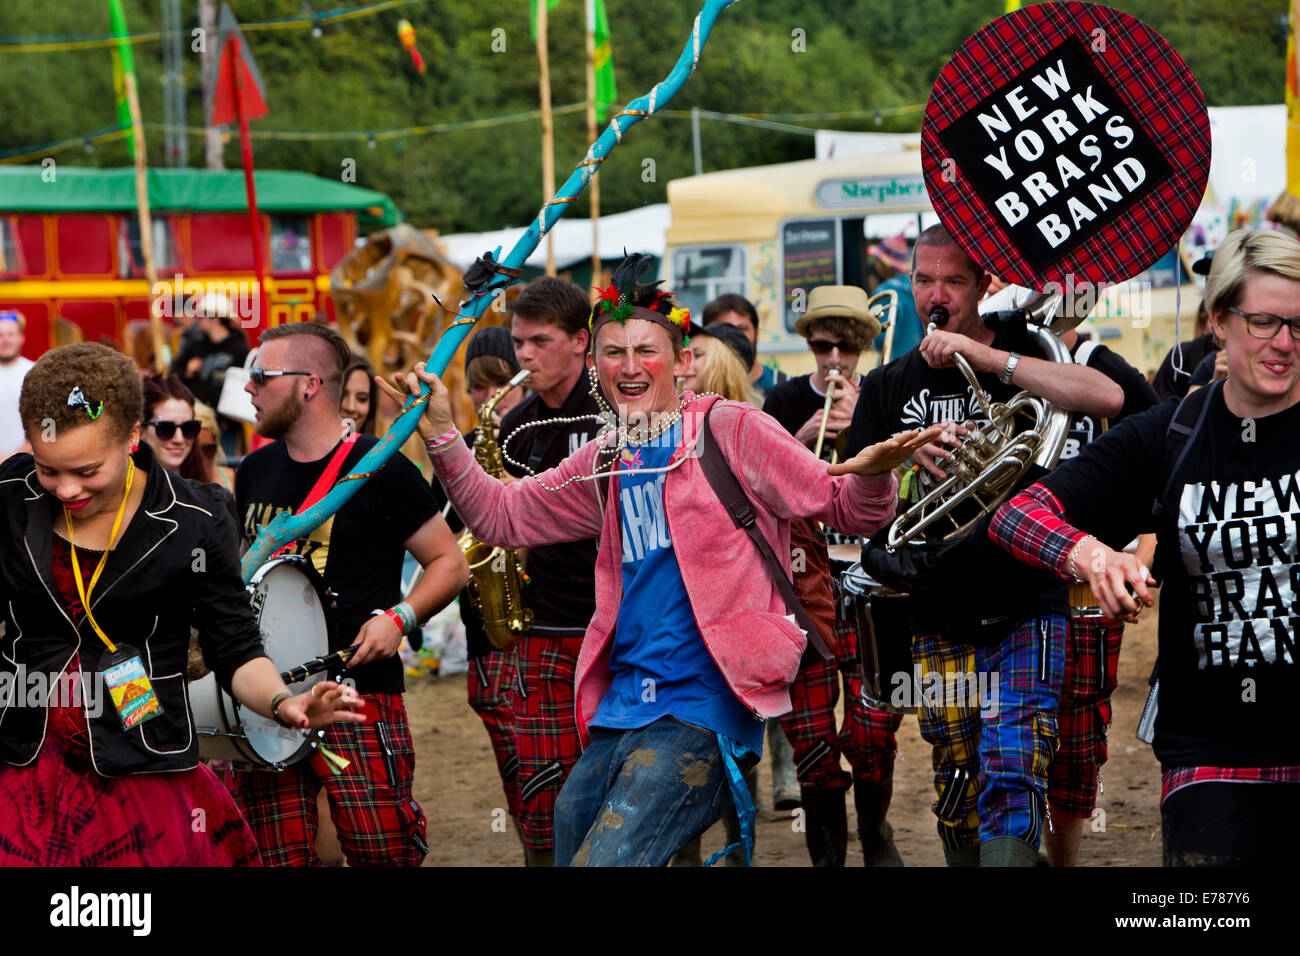 New York Brass Band stomping through Glastonbury festival. 2014 Stock Photo